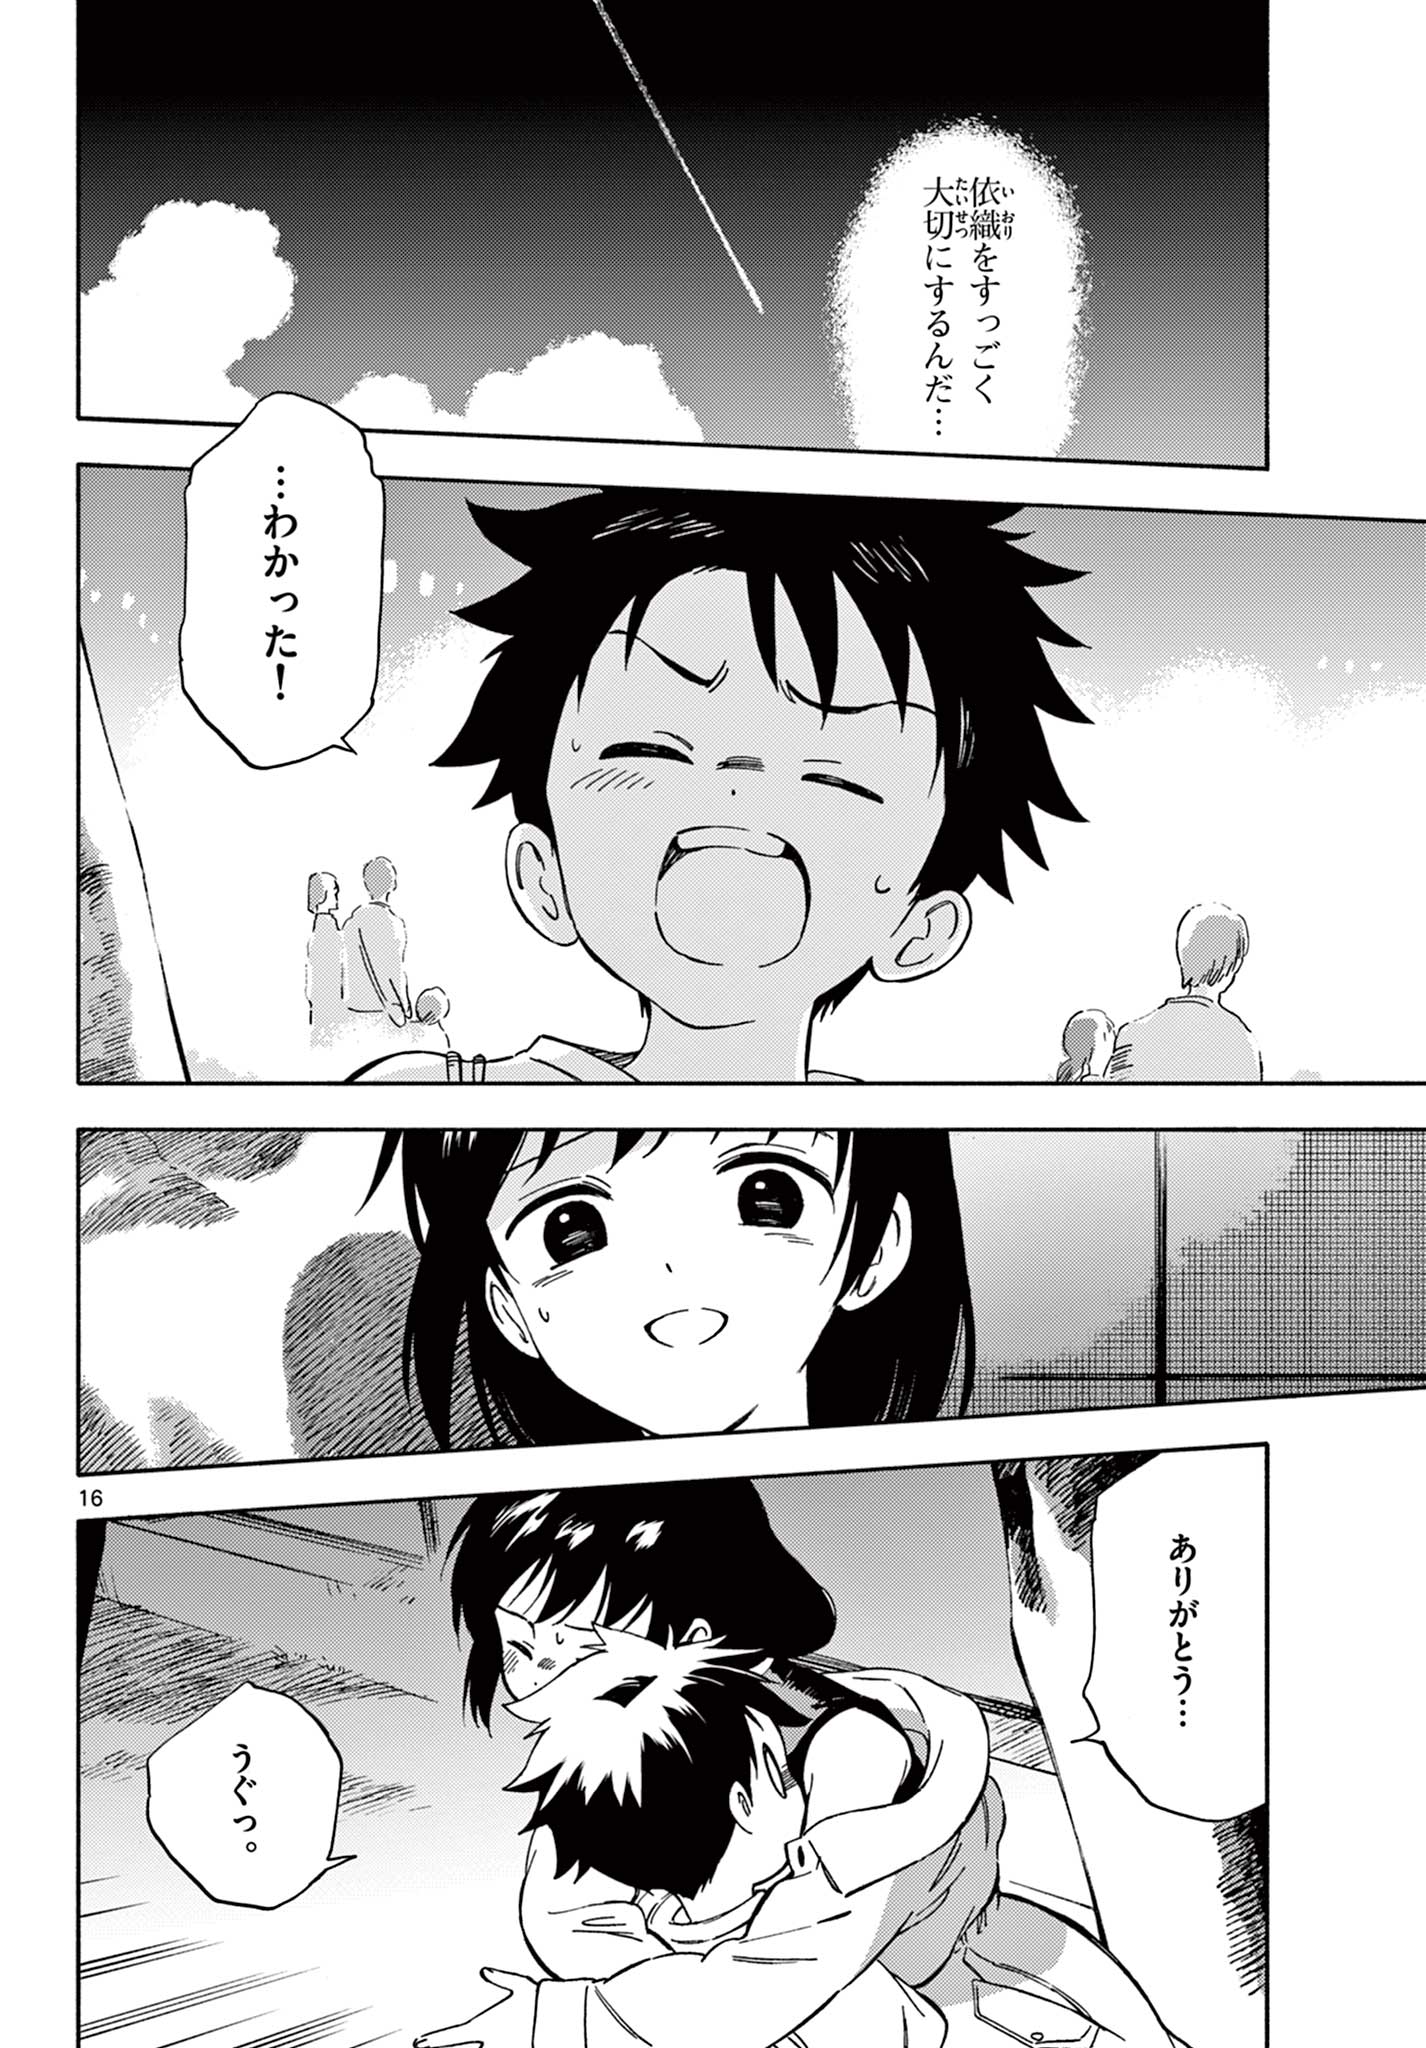 Nami no Shijima no Horizont - Chapter 7.2 - Page 1